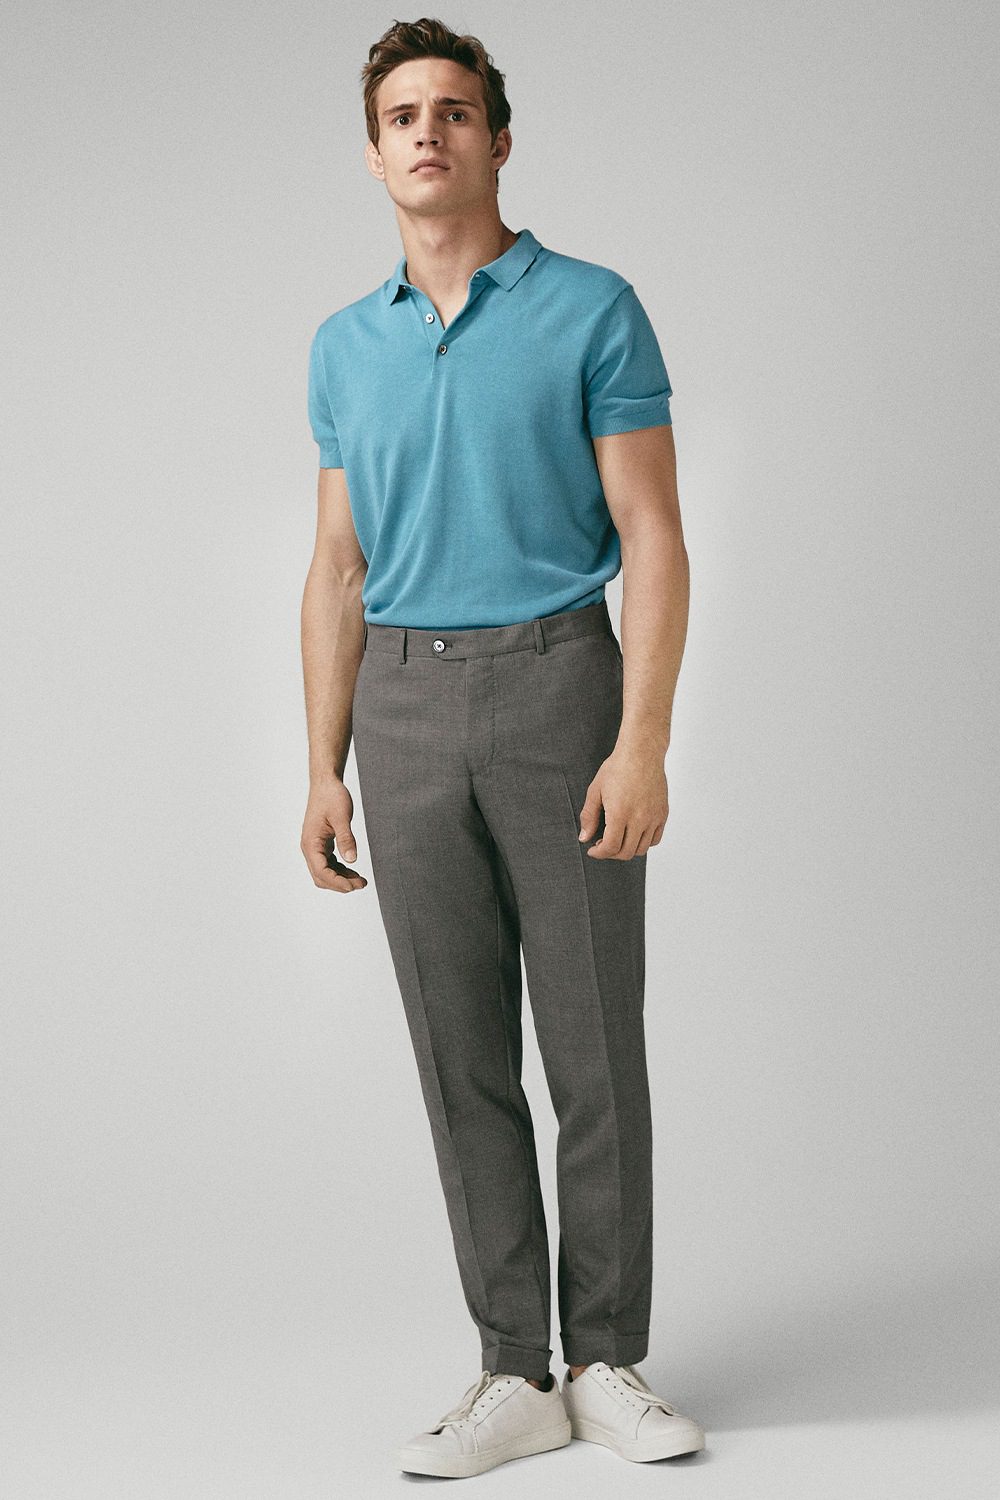 i wear a polo shirt,Save up to 16%,www.ilcascinone.com